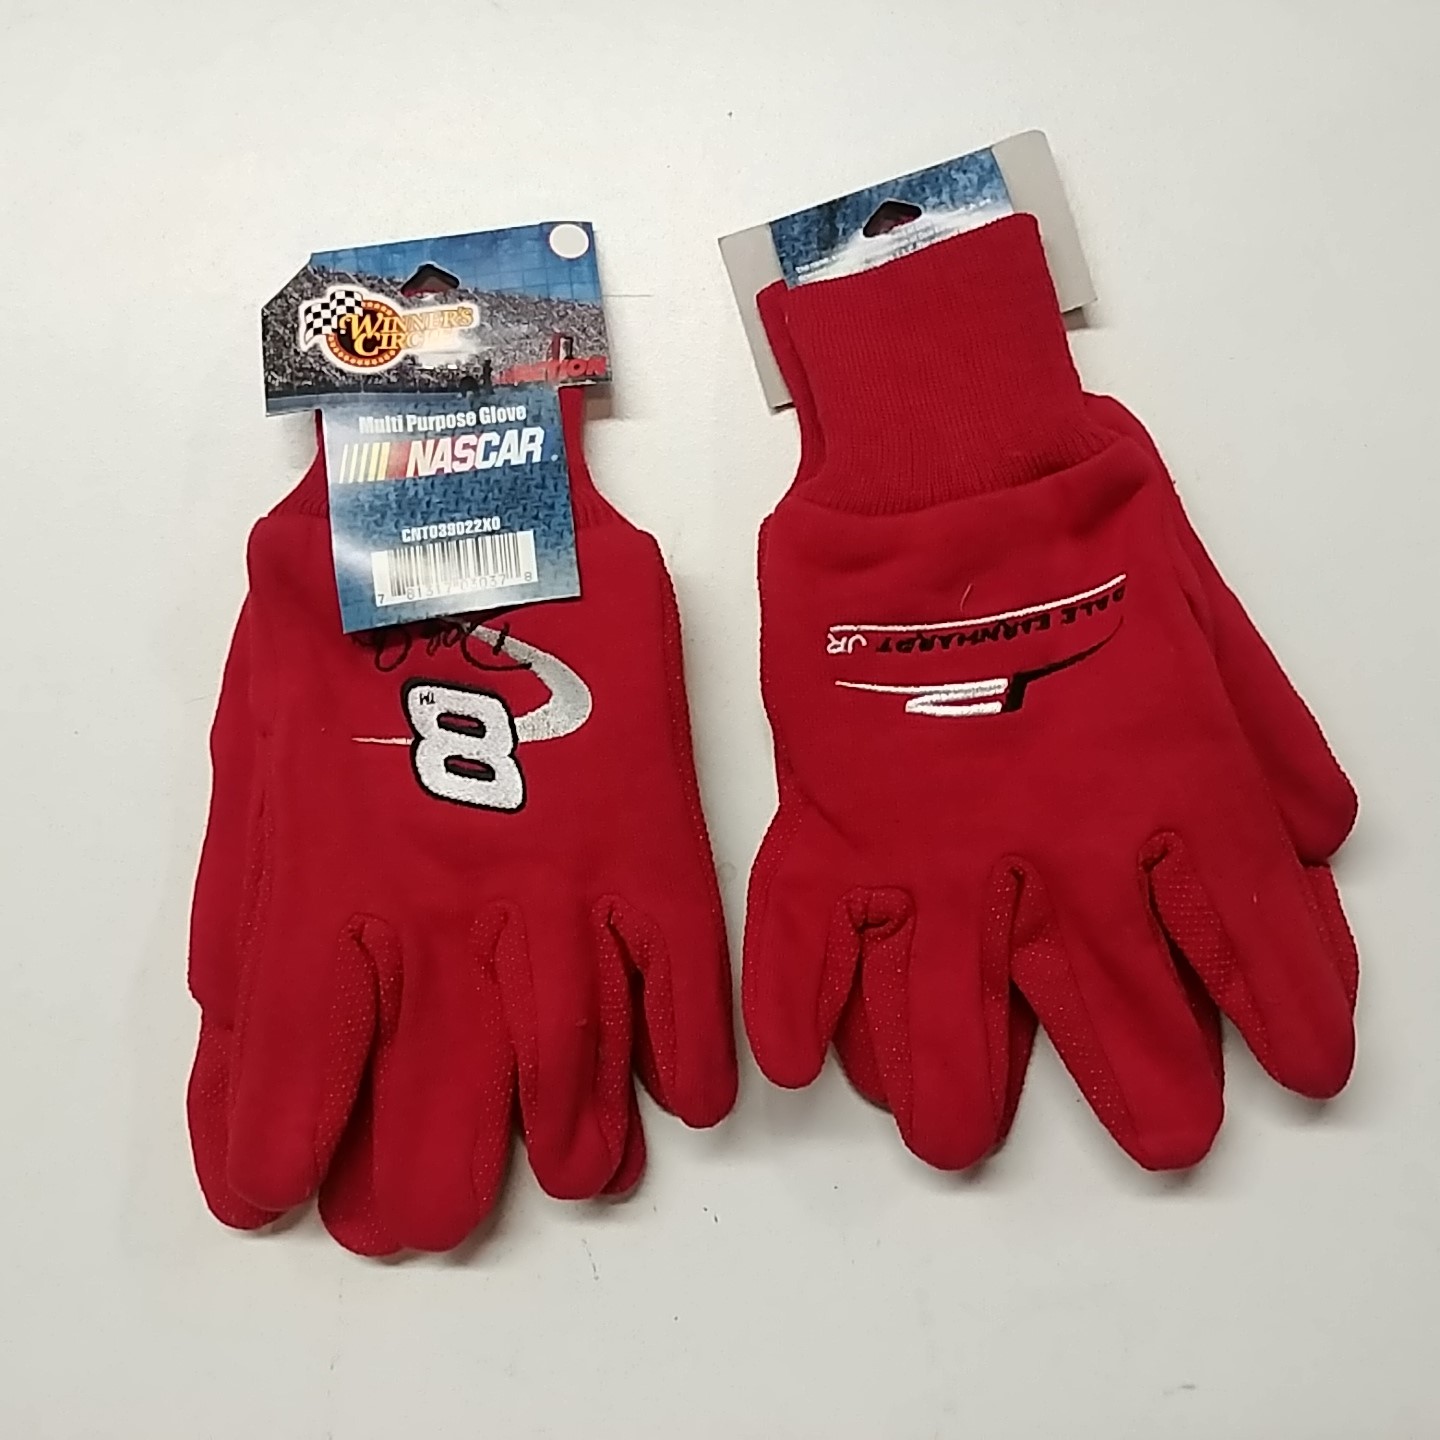 2003 Dale Earnhardt Jr #8 JR Motorsports multi purpose gloves one pair